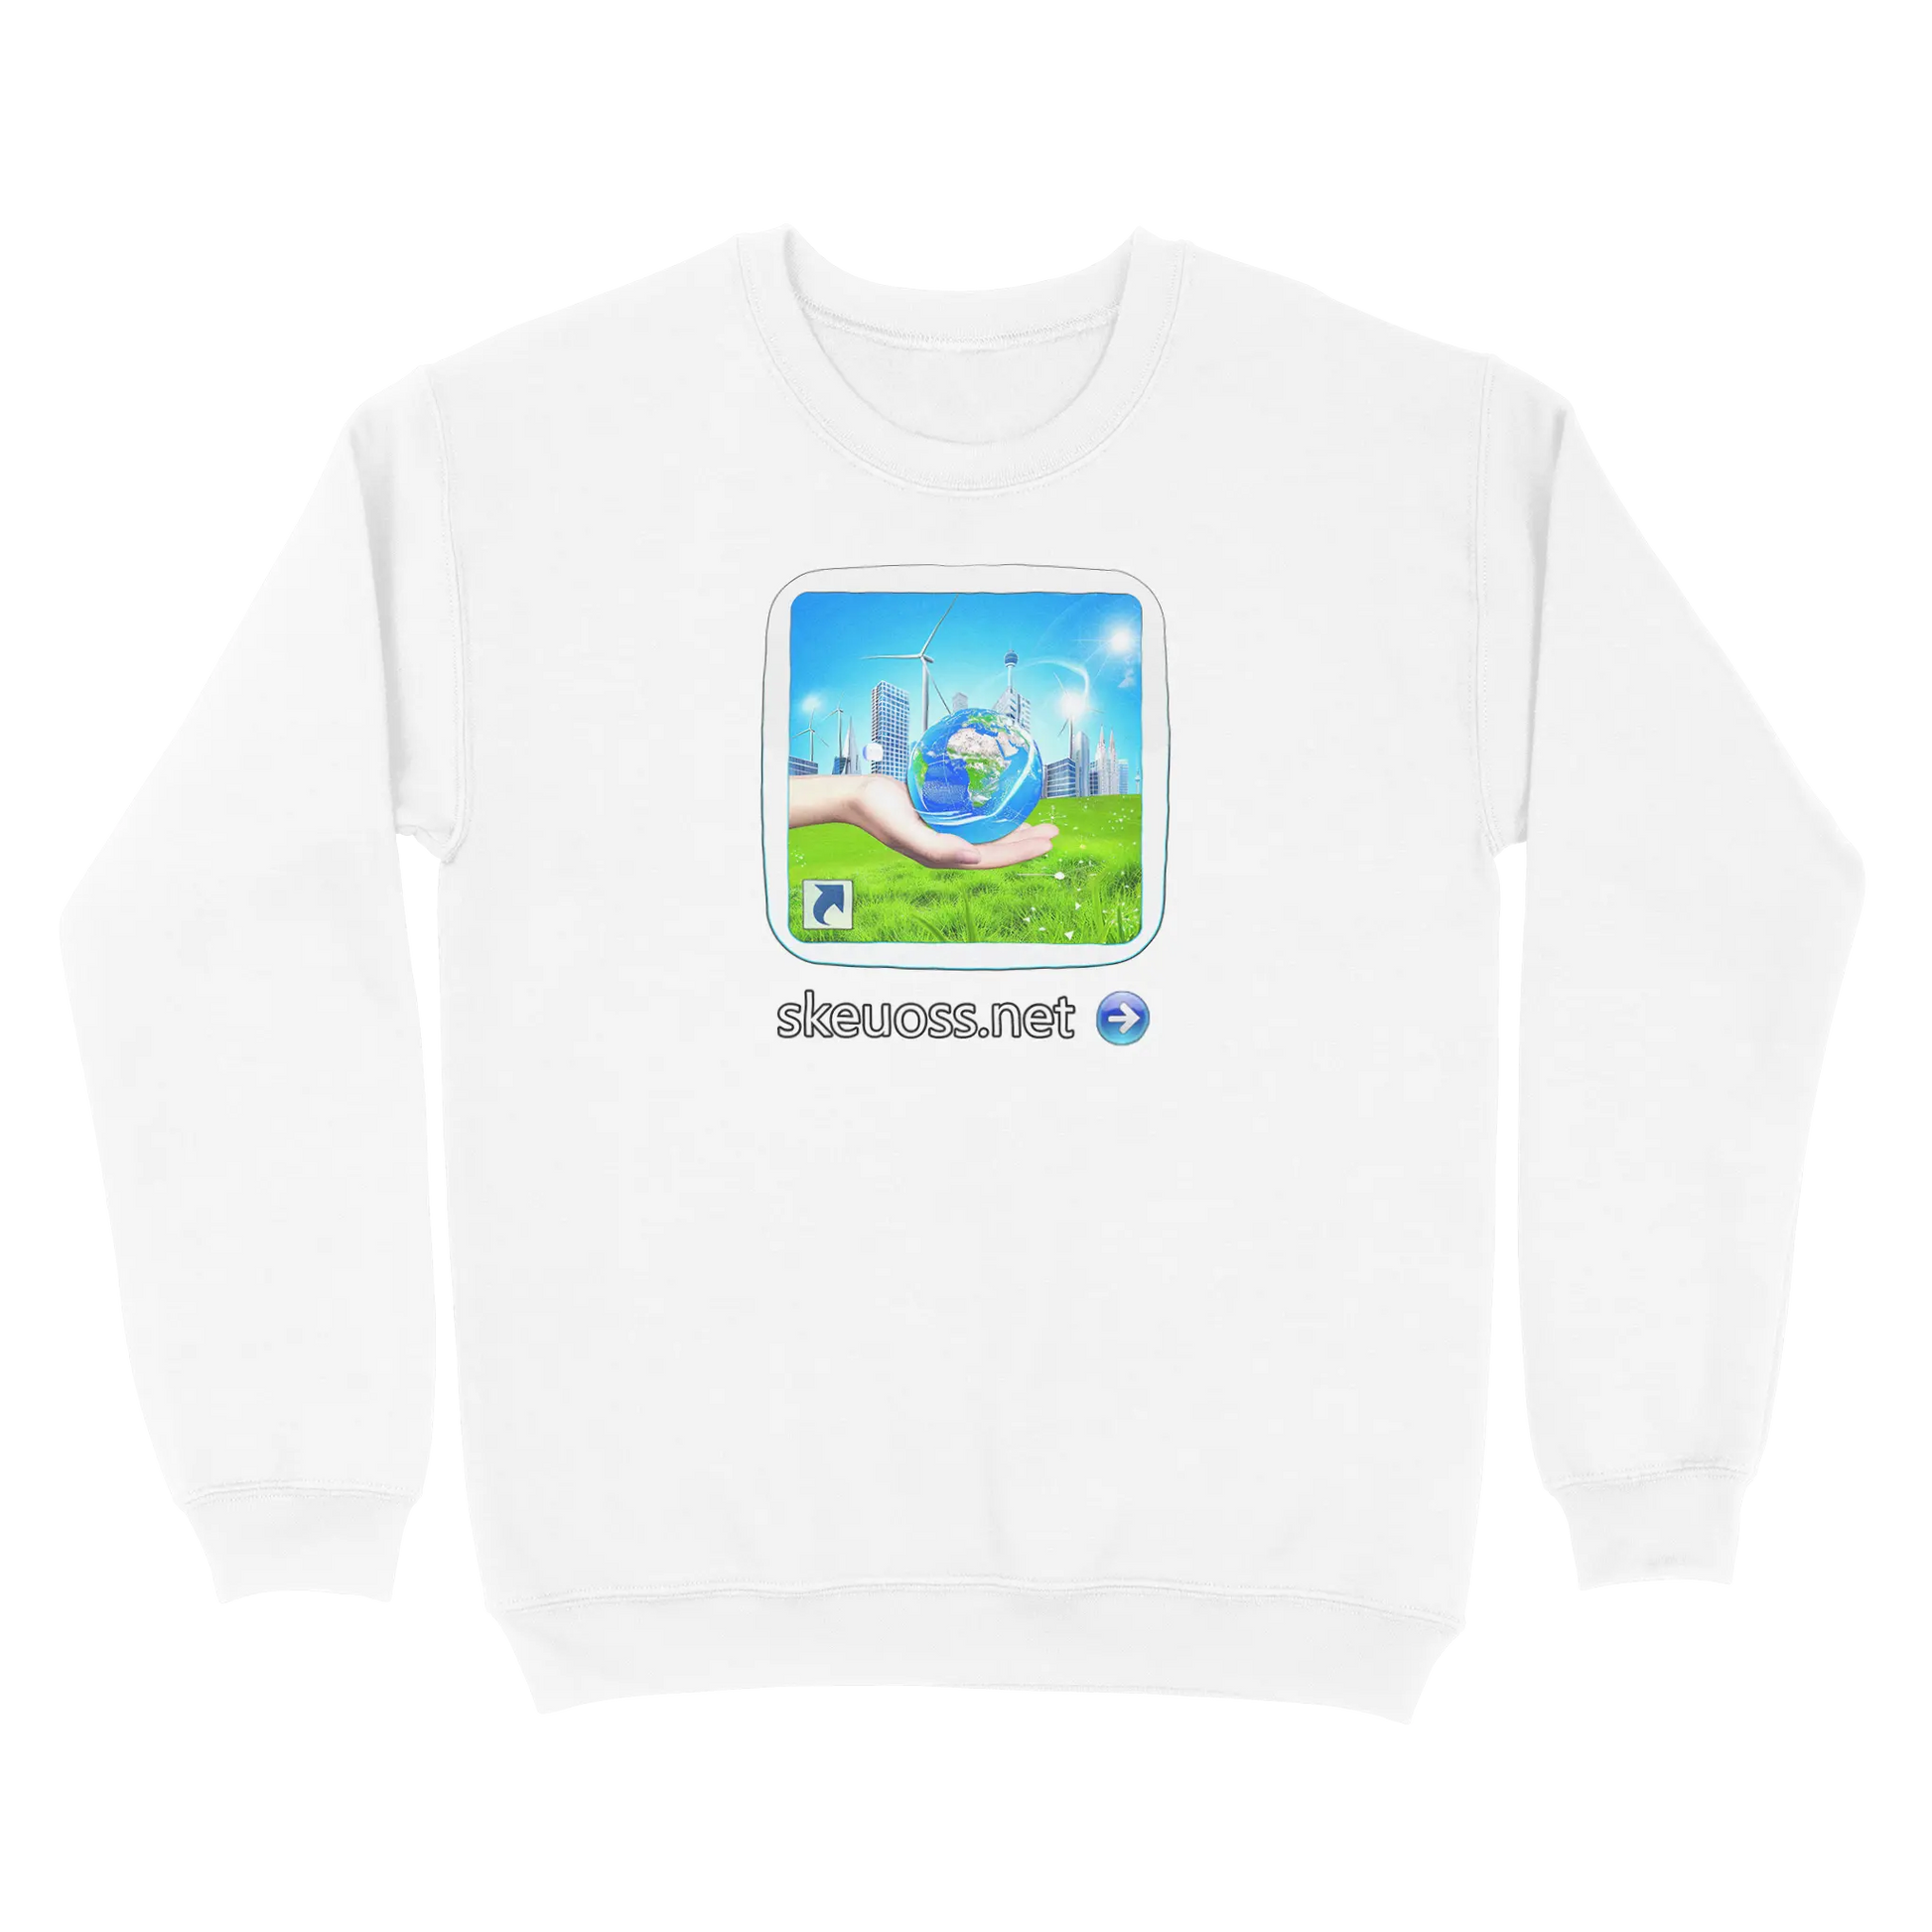 Frutiger Aero Sweatshirt - User Login Collection - User 140